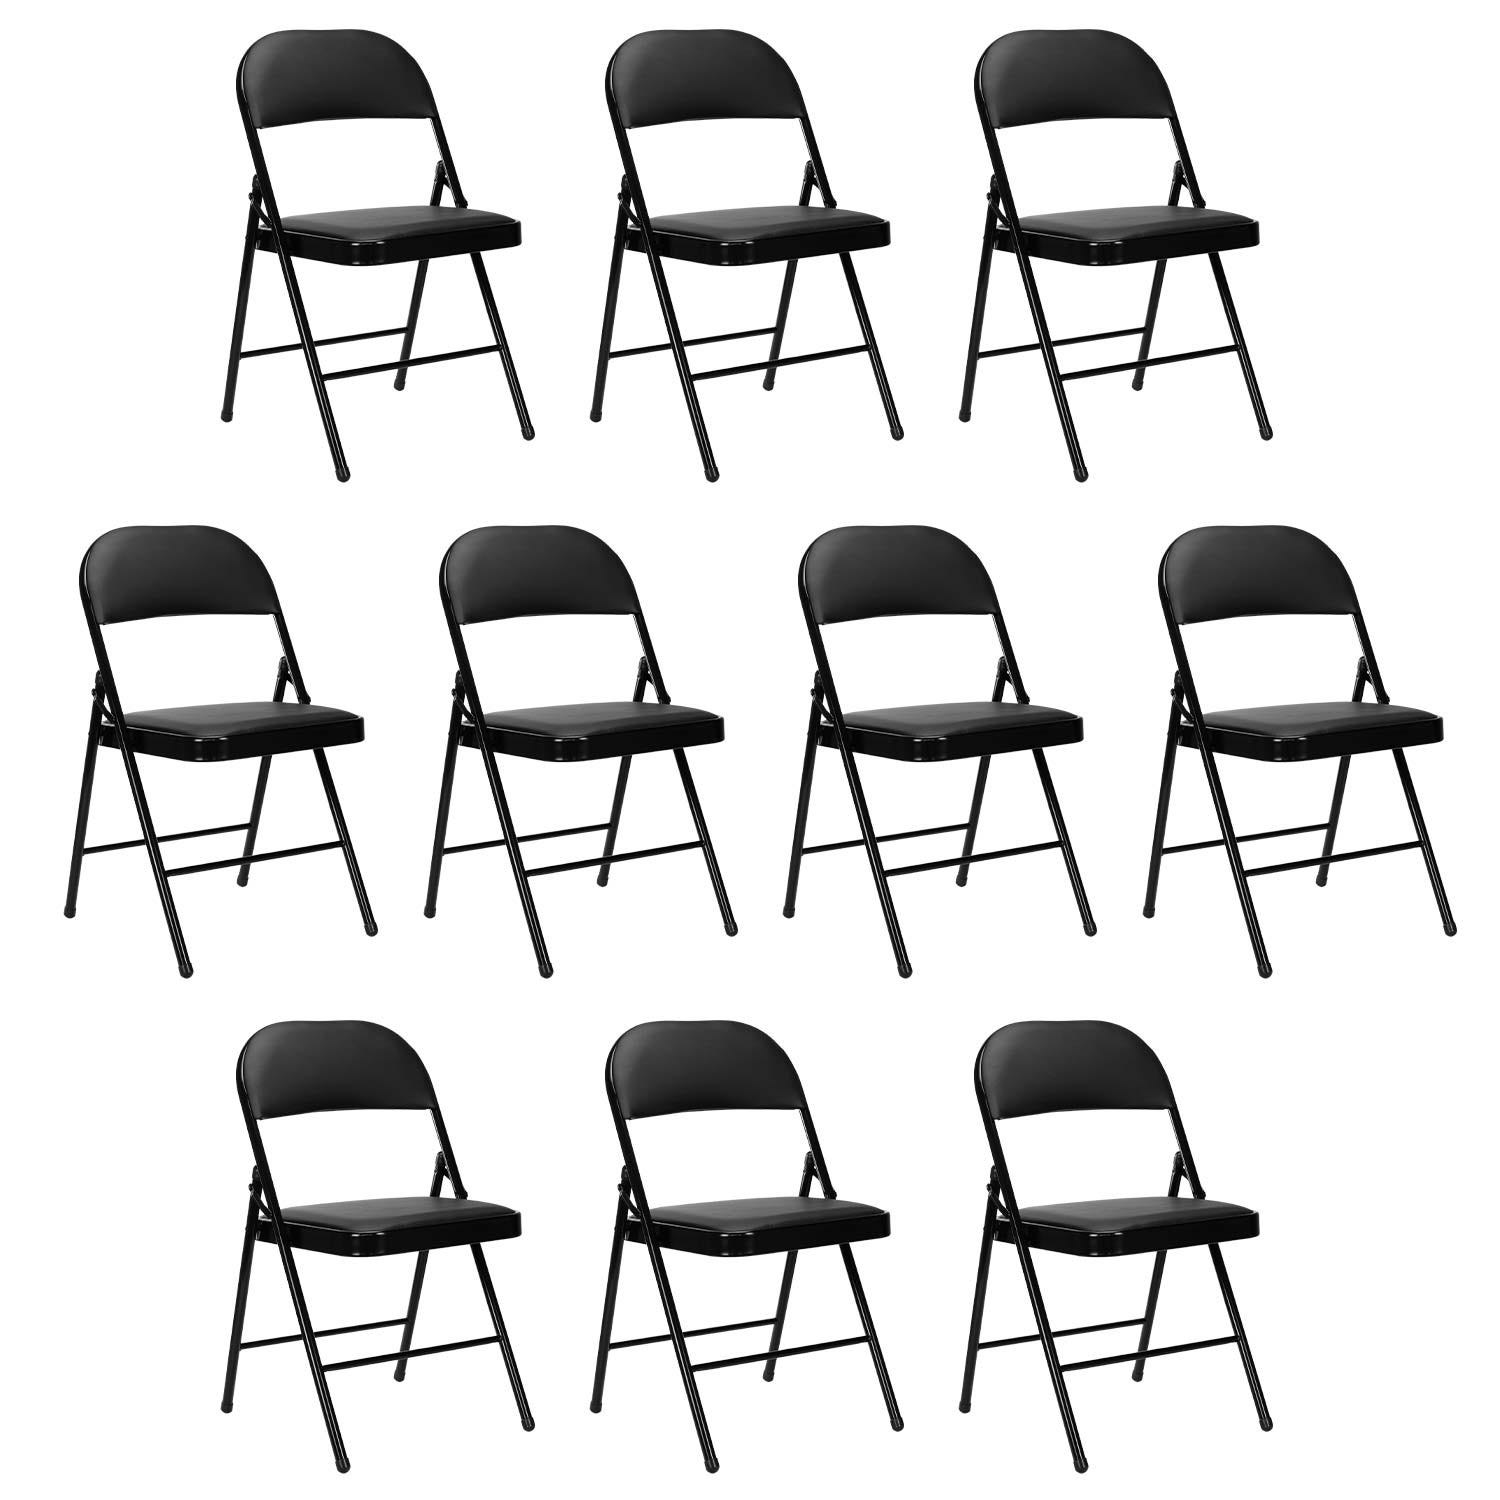 Alquiler de sillas plegables acolchadas negras